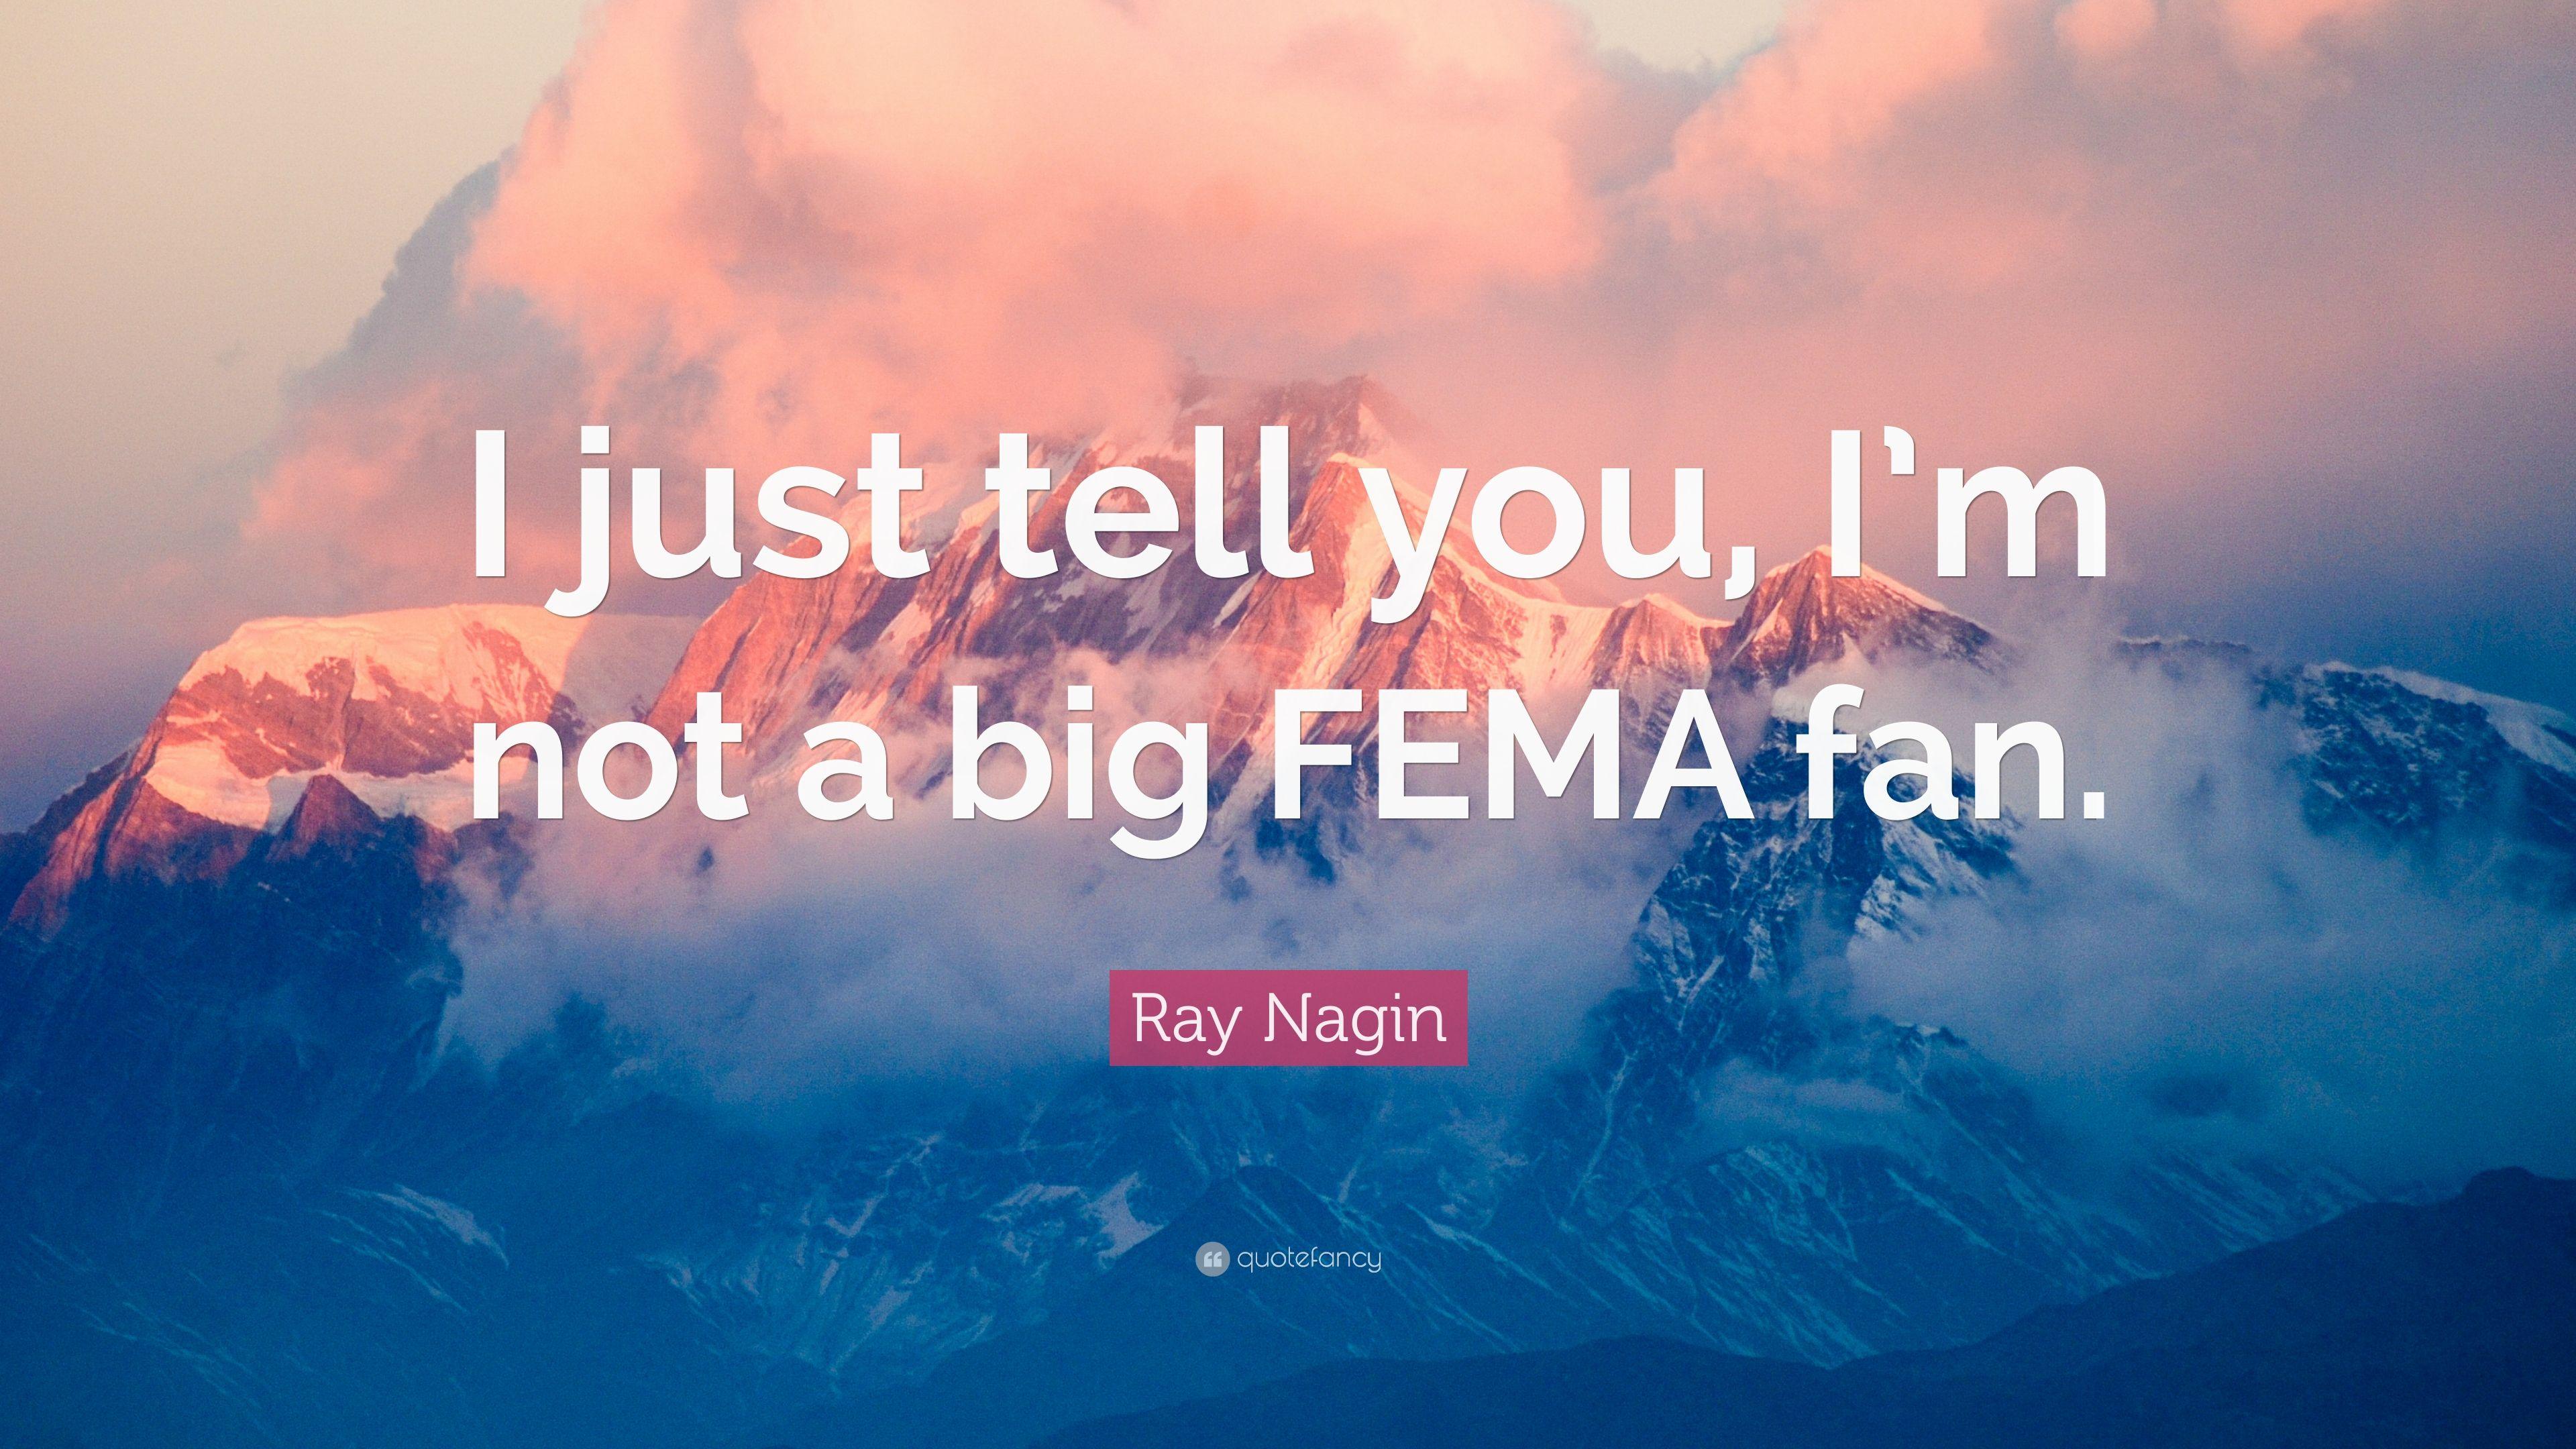 Ray Nagin Quote: “I just tell you, I'm not a big FEMA fan